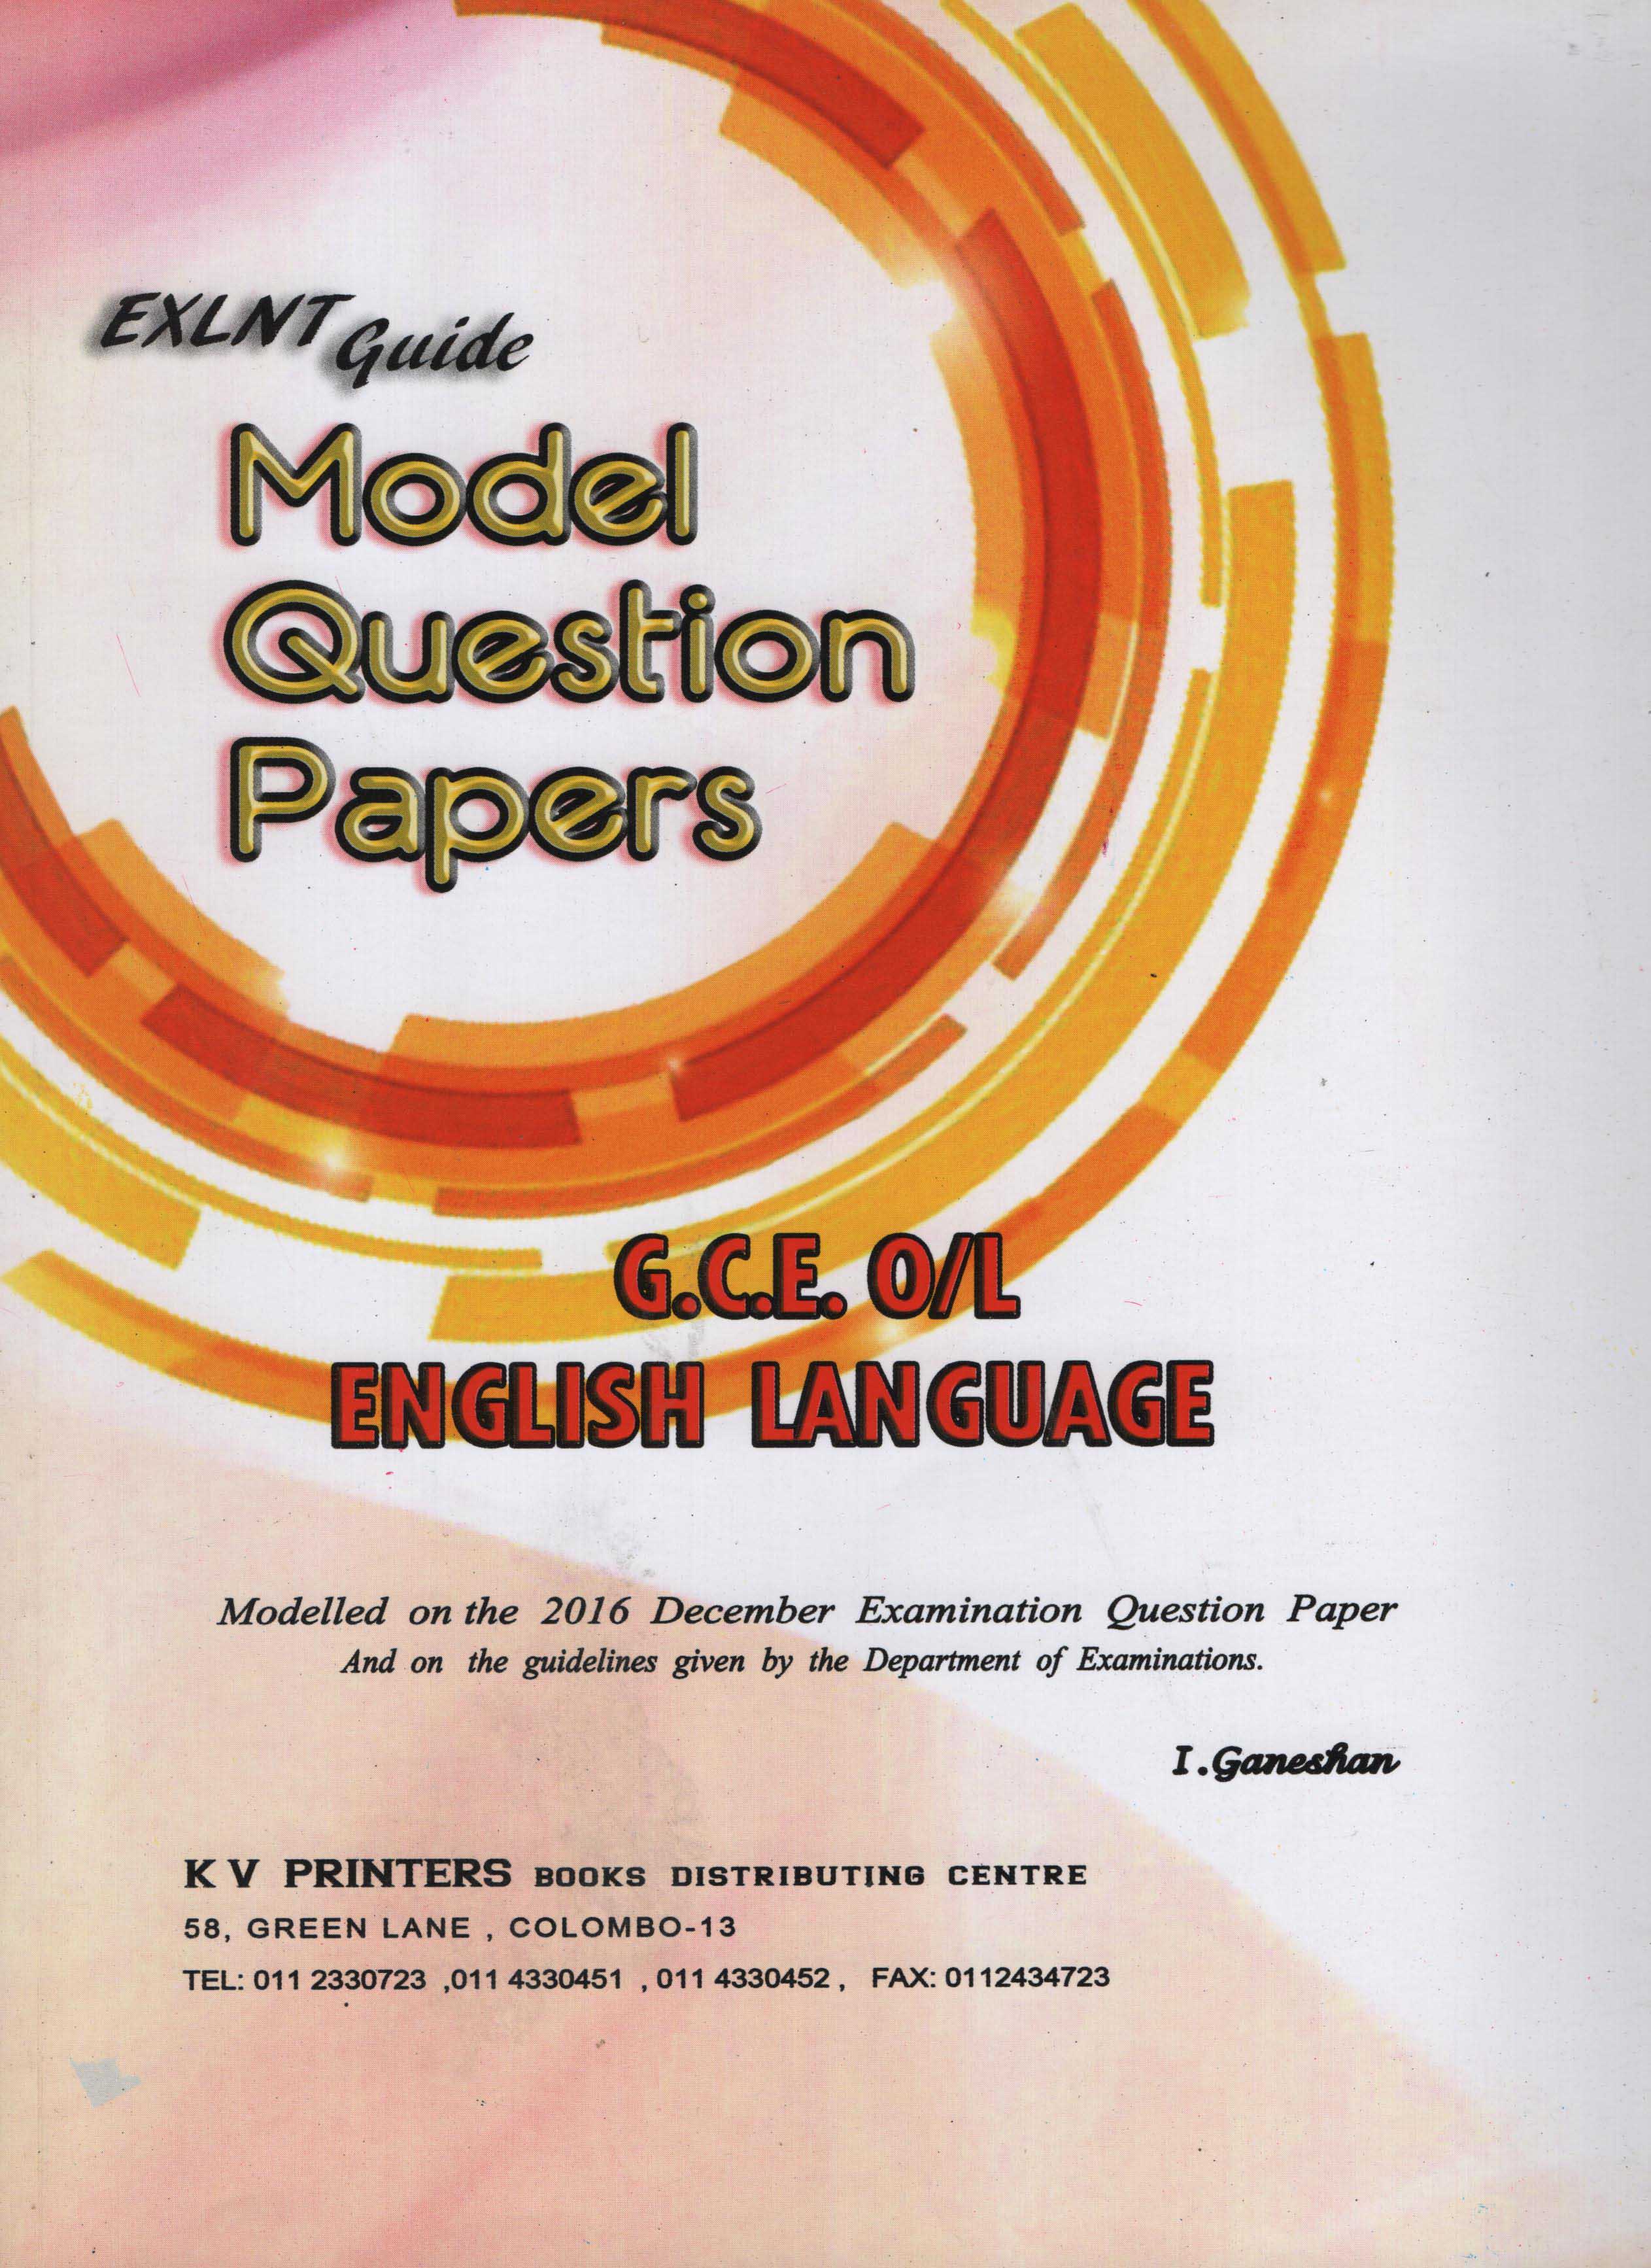 EXLNT Guide - Model Question Papers G.C.E. O/L English Language